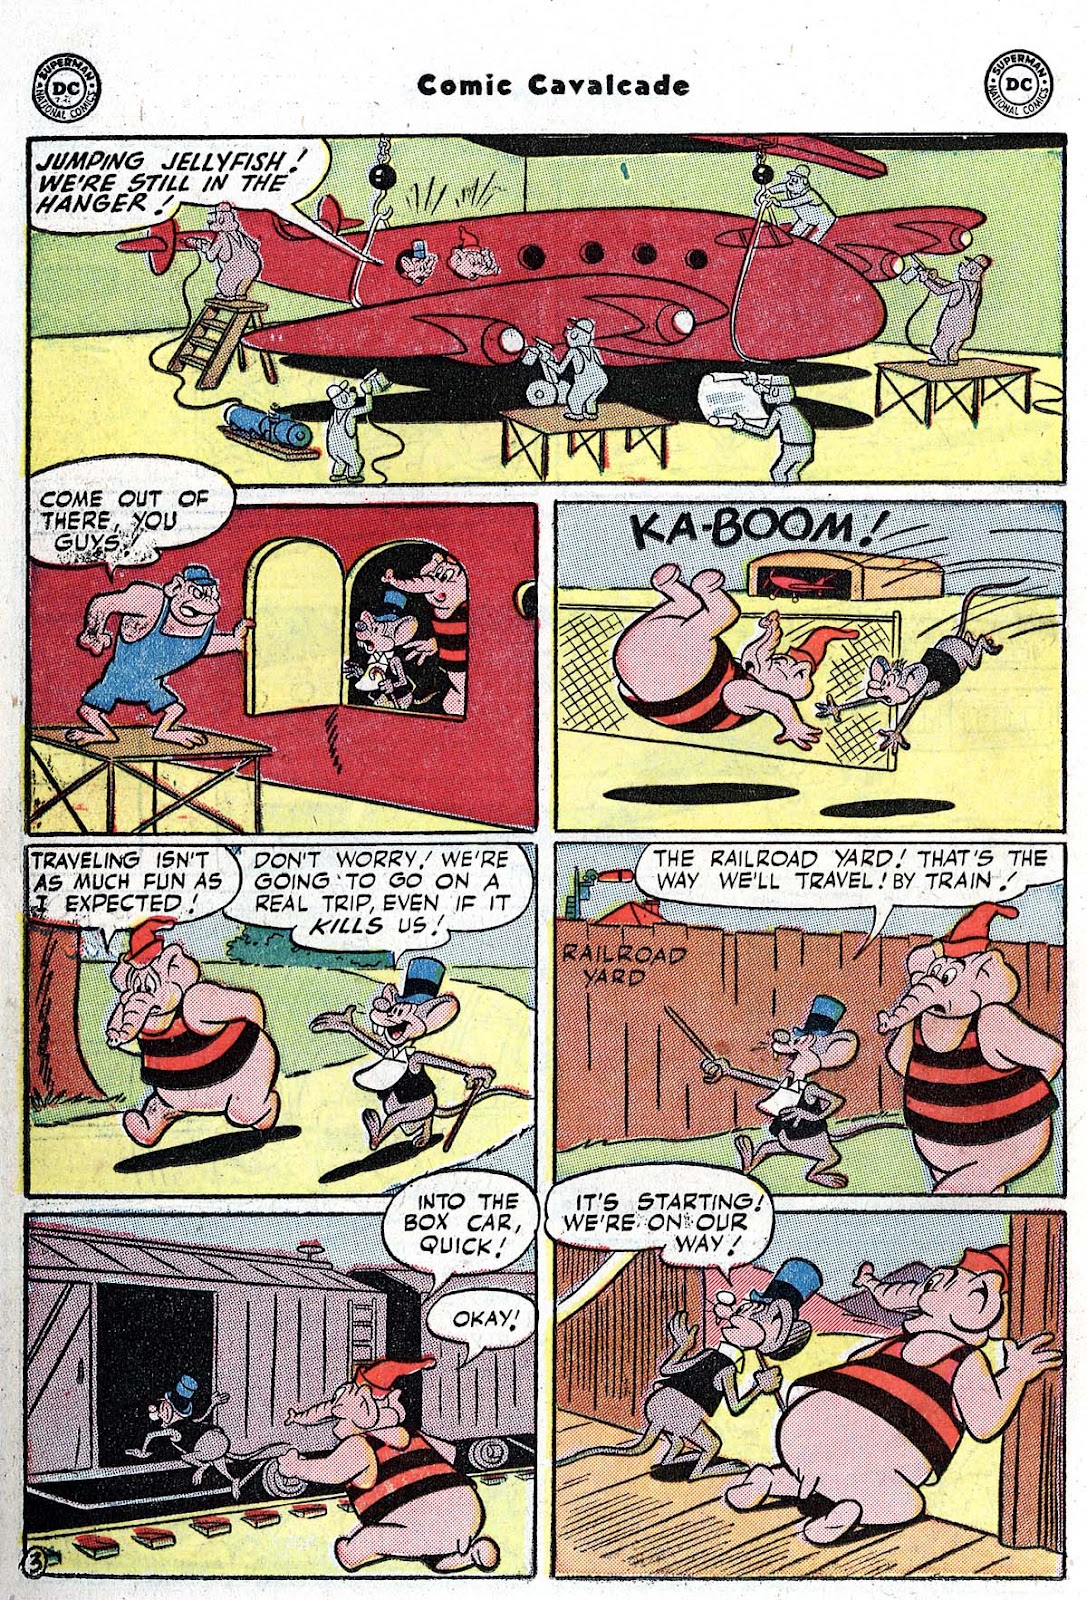 Comic Cavalcade issue 58 - Page 50